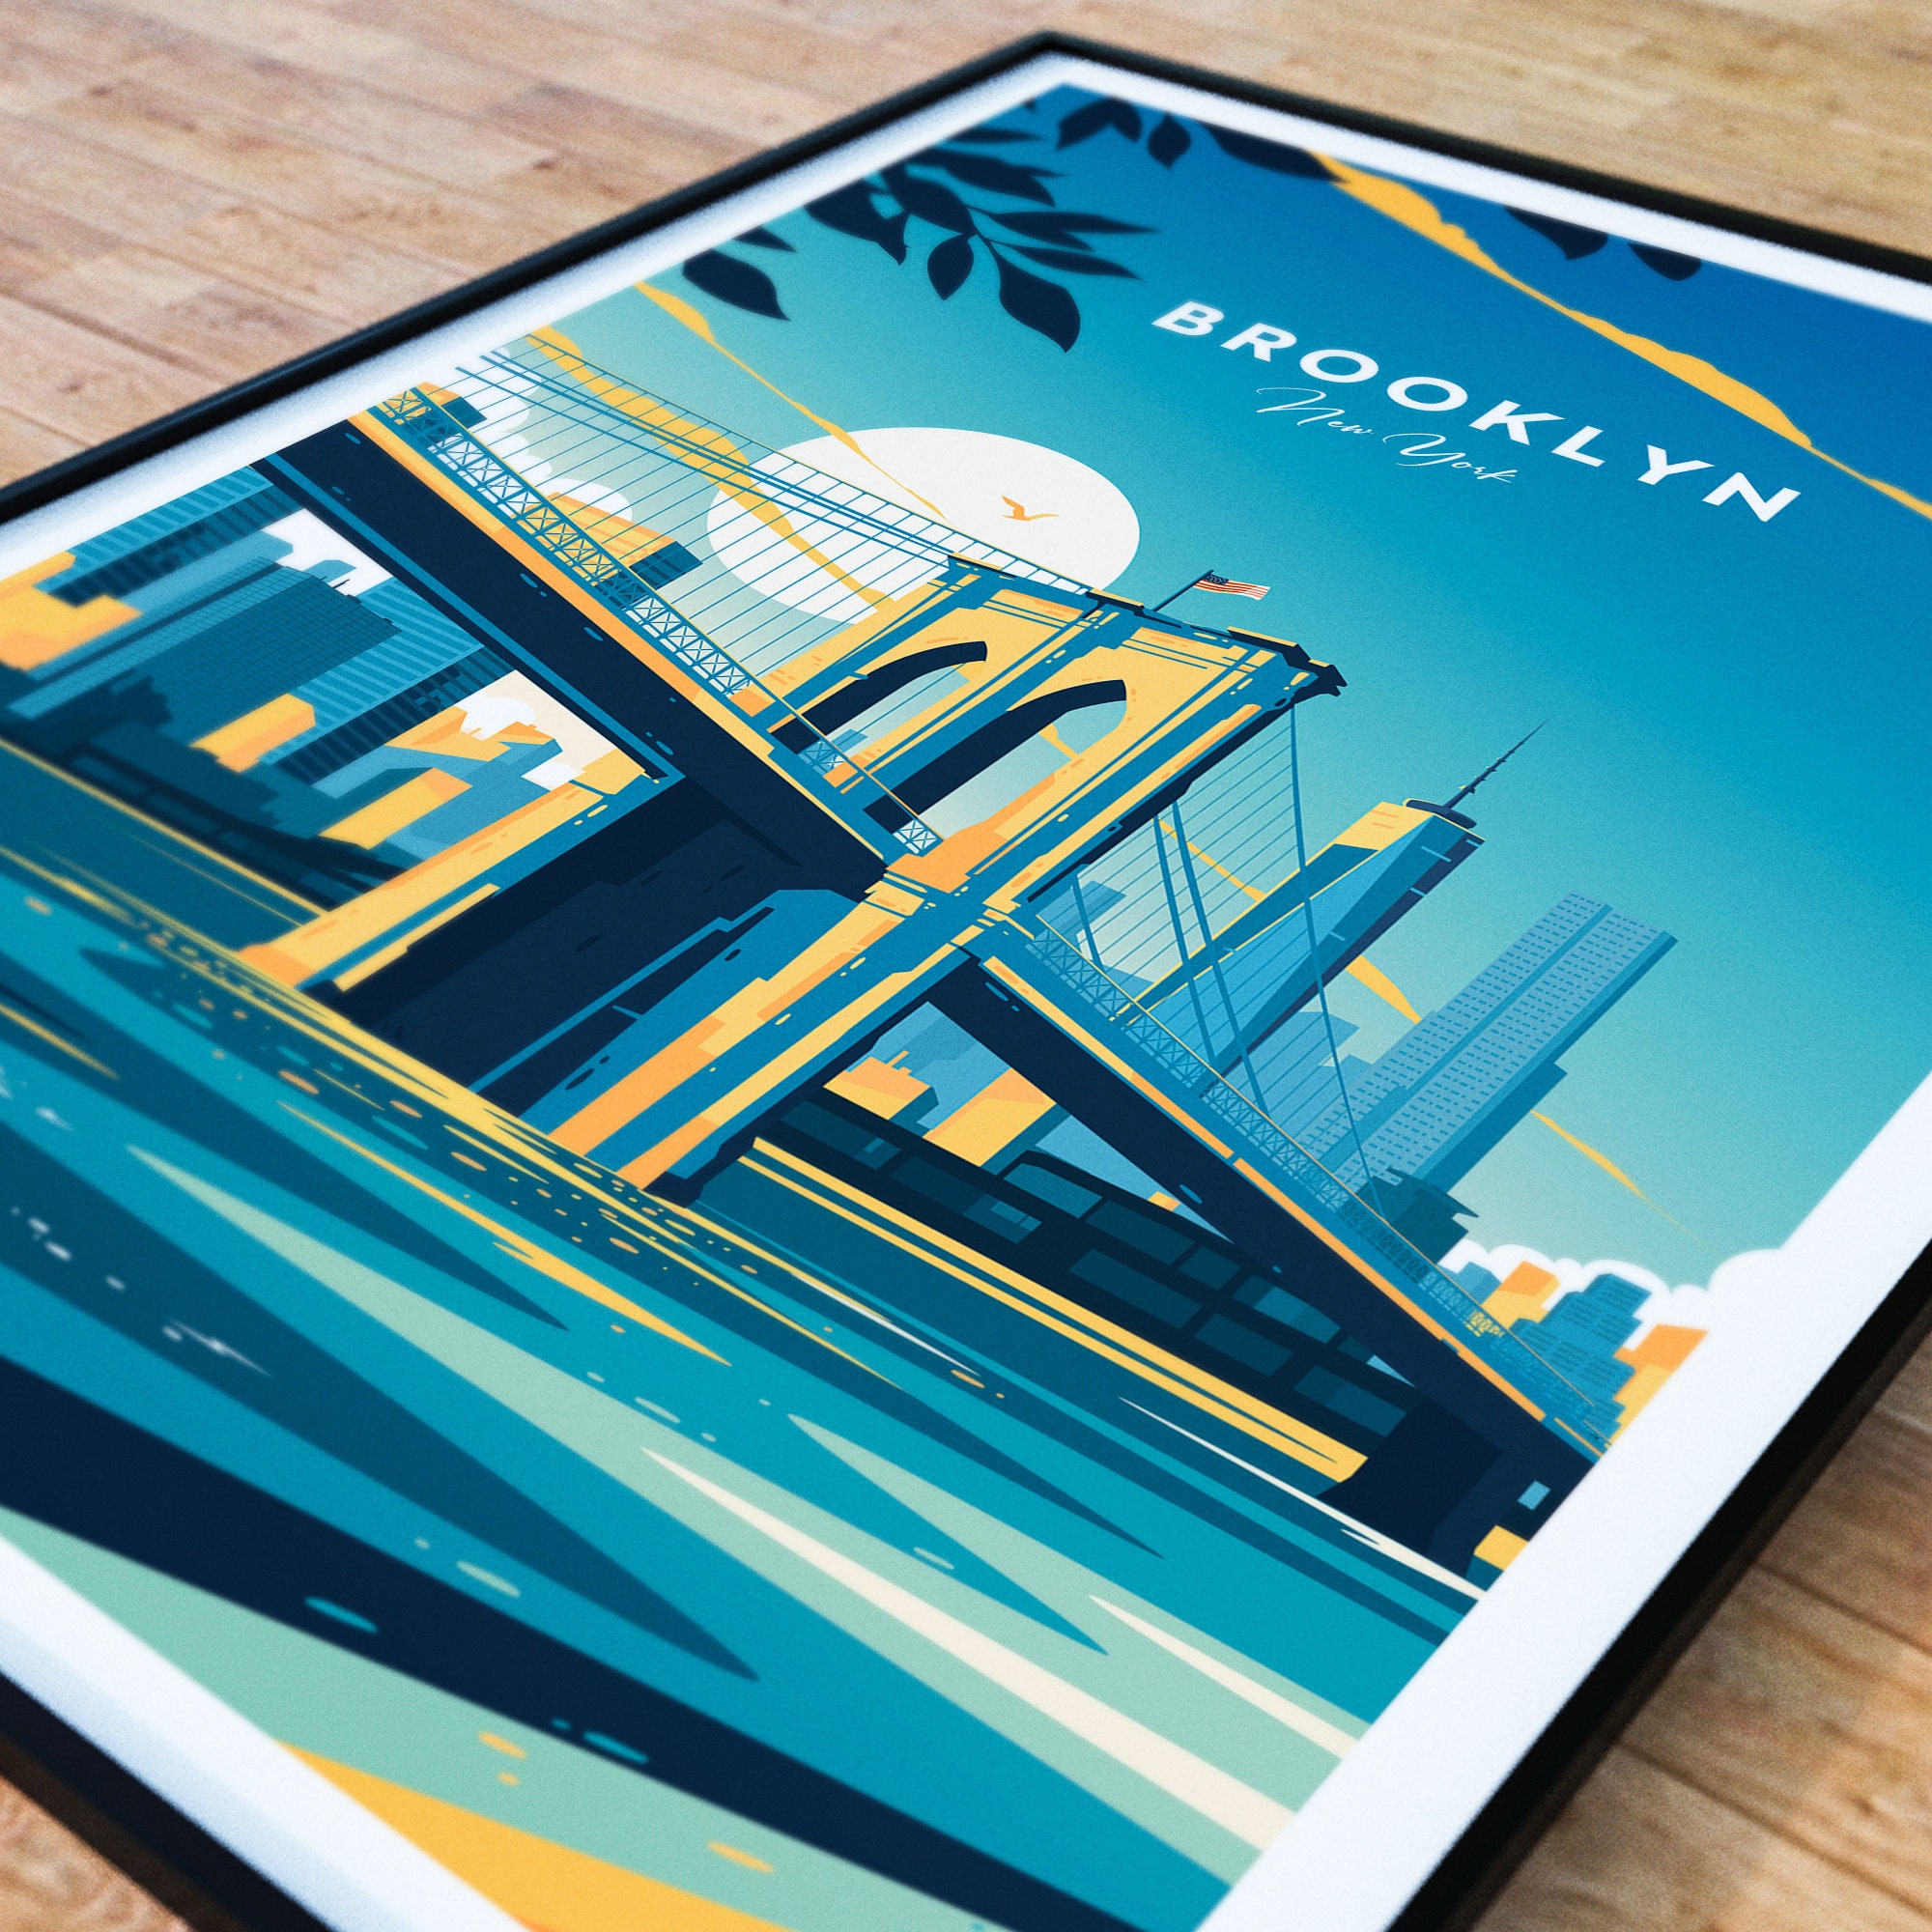 Discover Brooklyn traditional travel print - New York, Brooklyn Bridge, New York poster, Wedding gifts